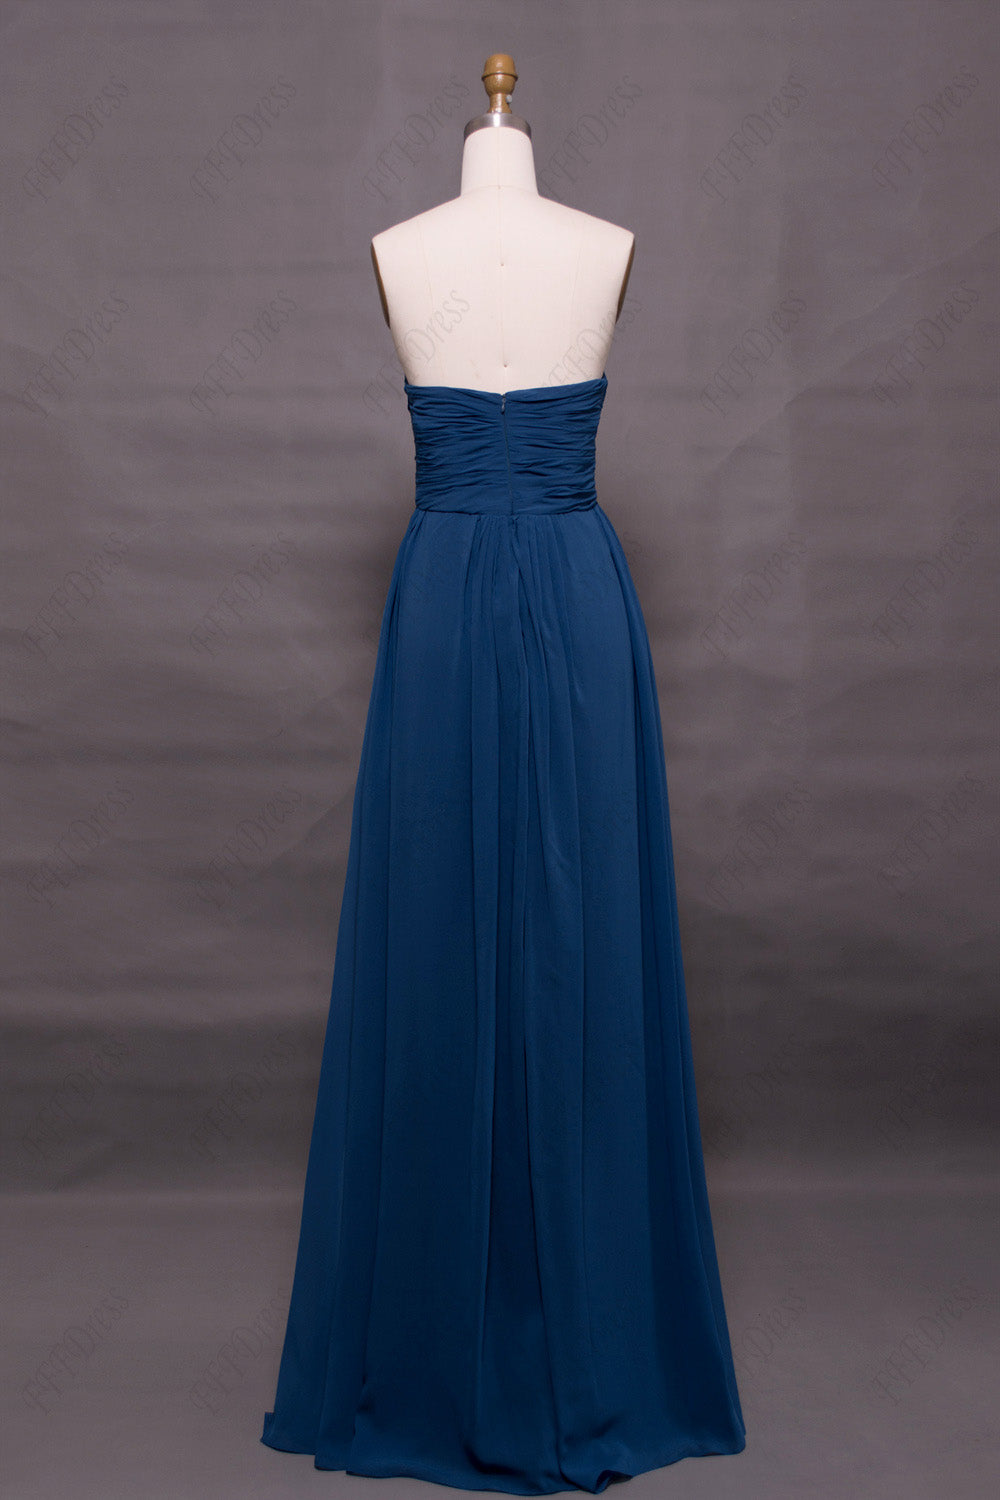 Sweetheart indigo blue bridesmaid dresses long